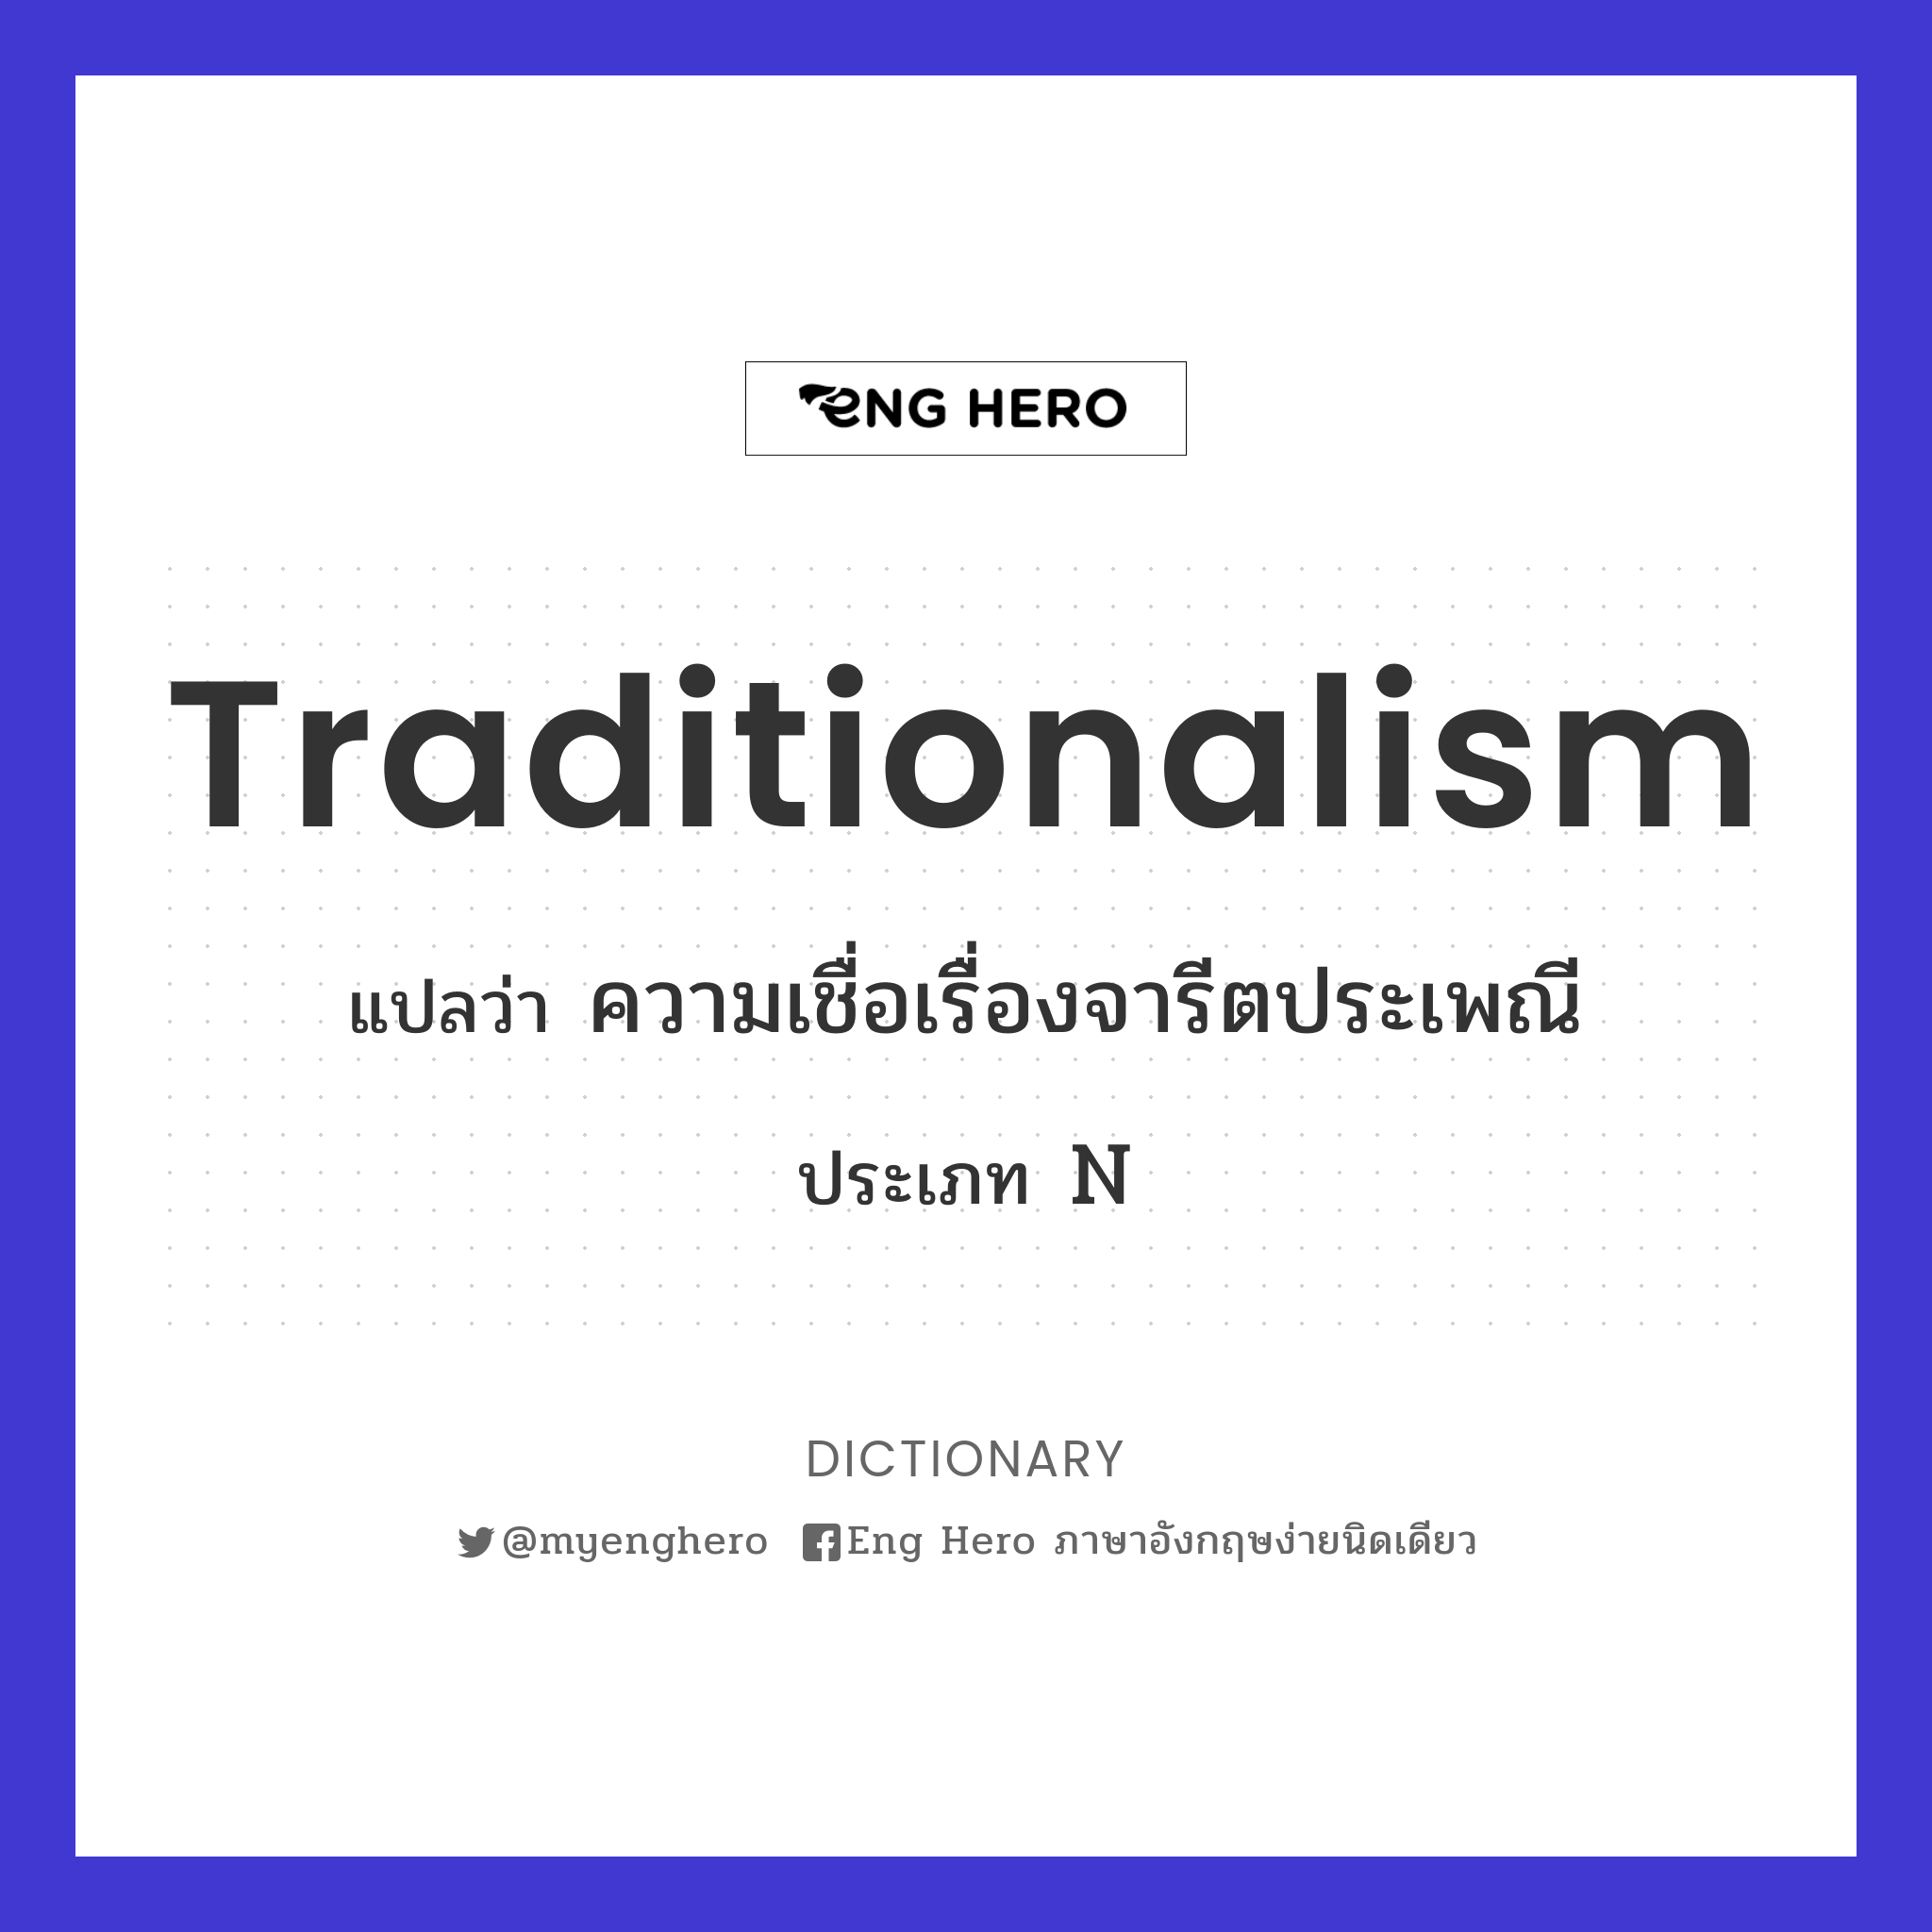 traditionalism